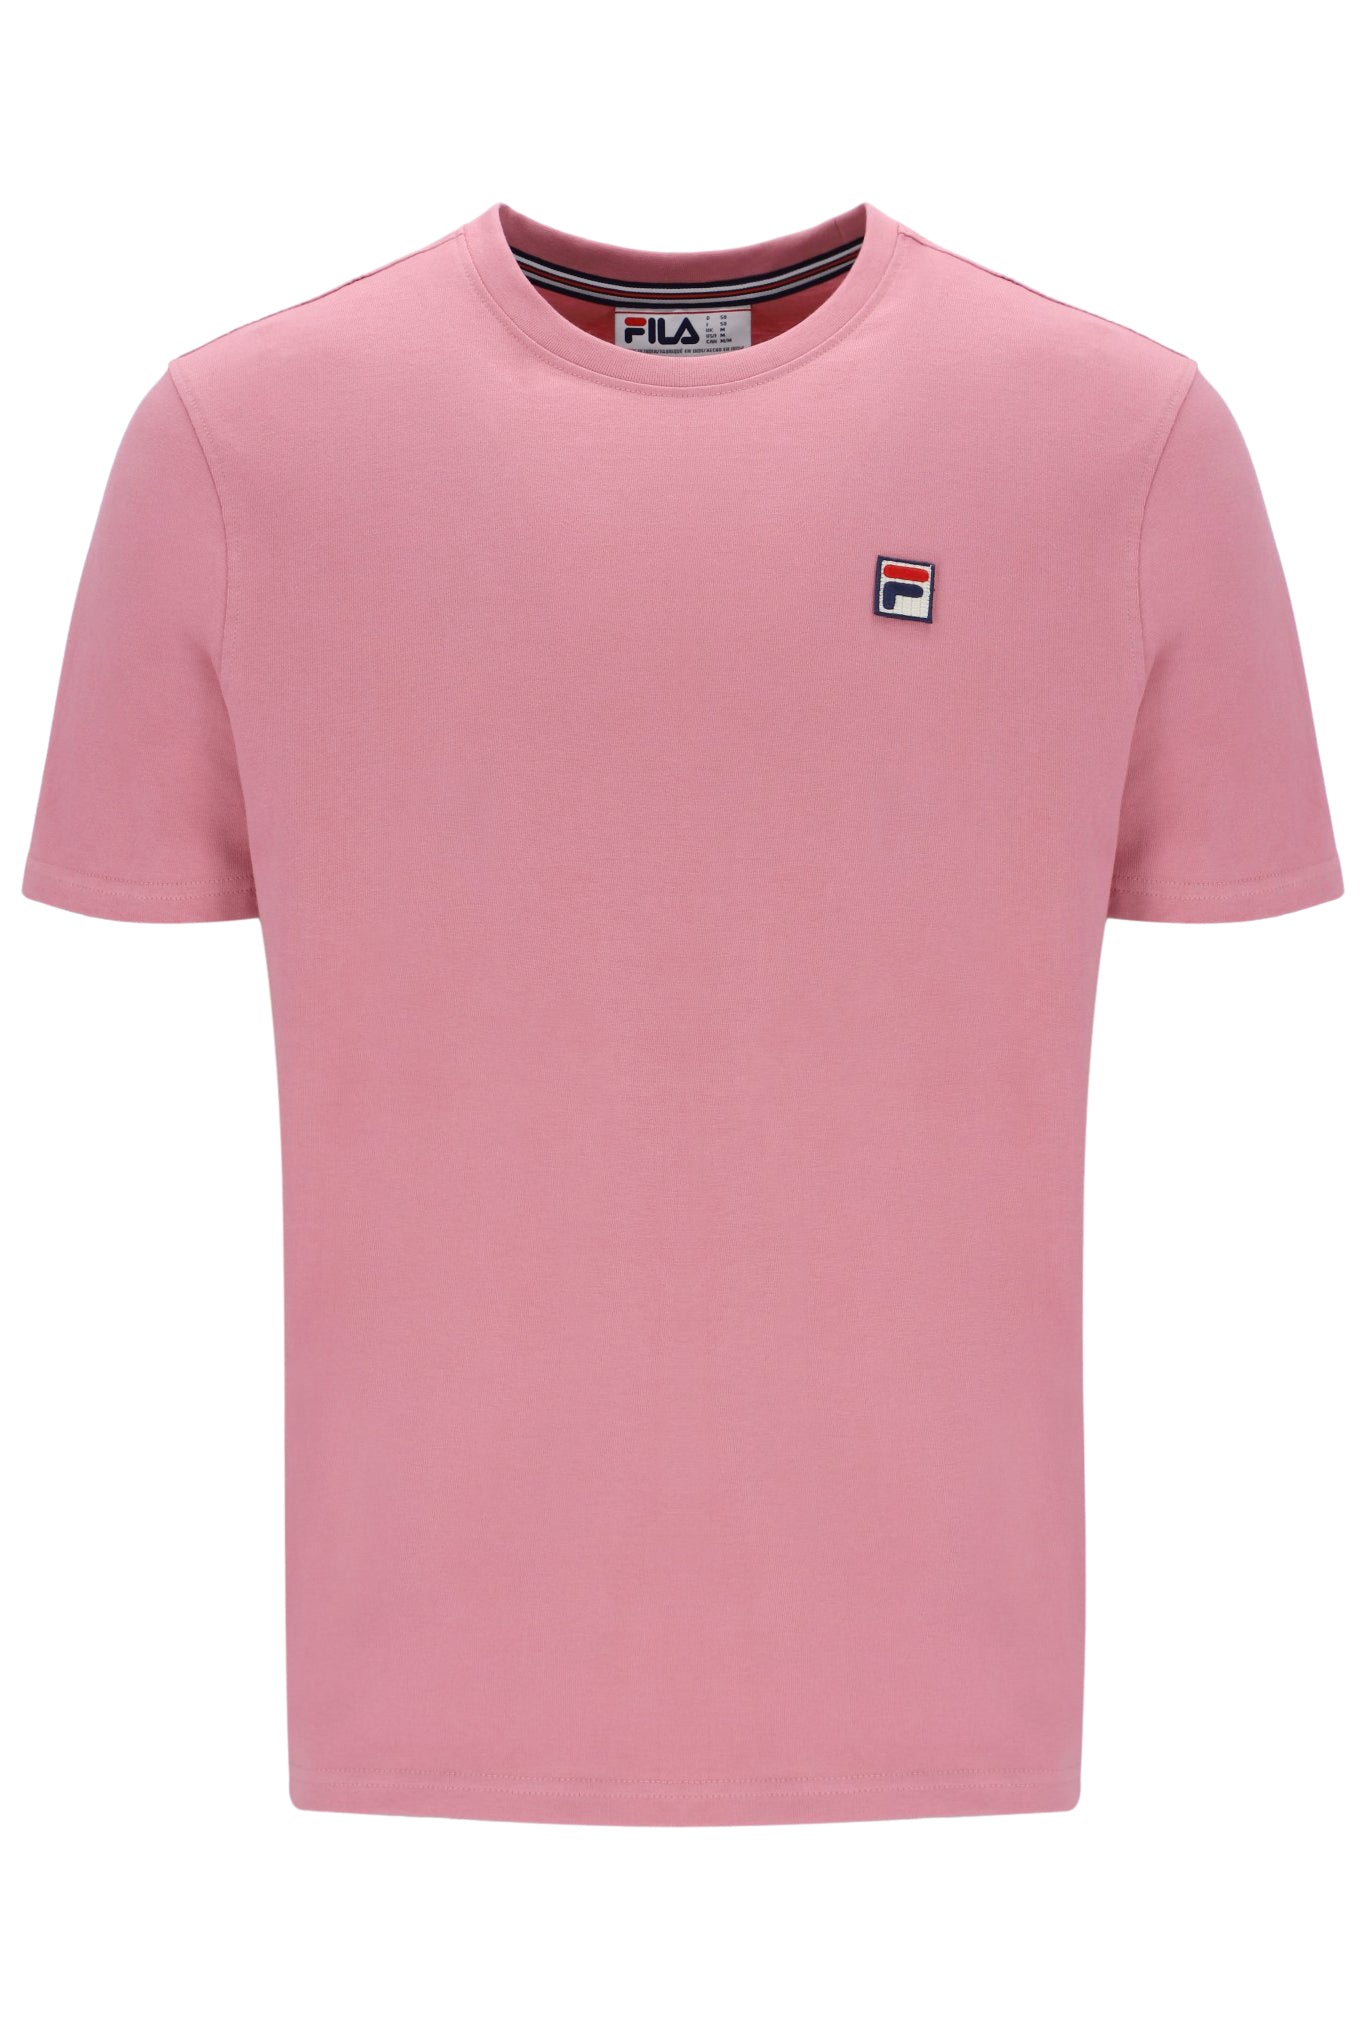 FILA Sunny Essential T-Shirt - Foxglove